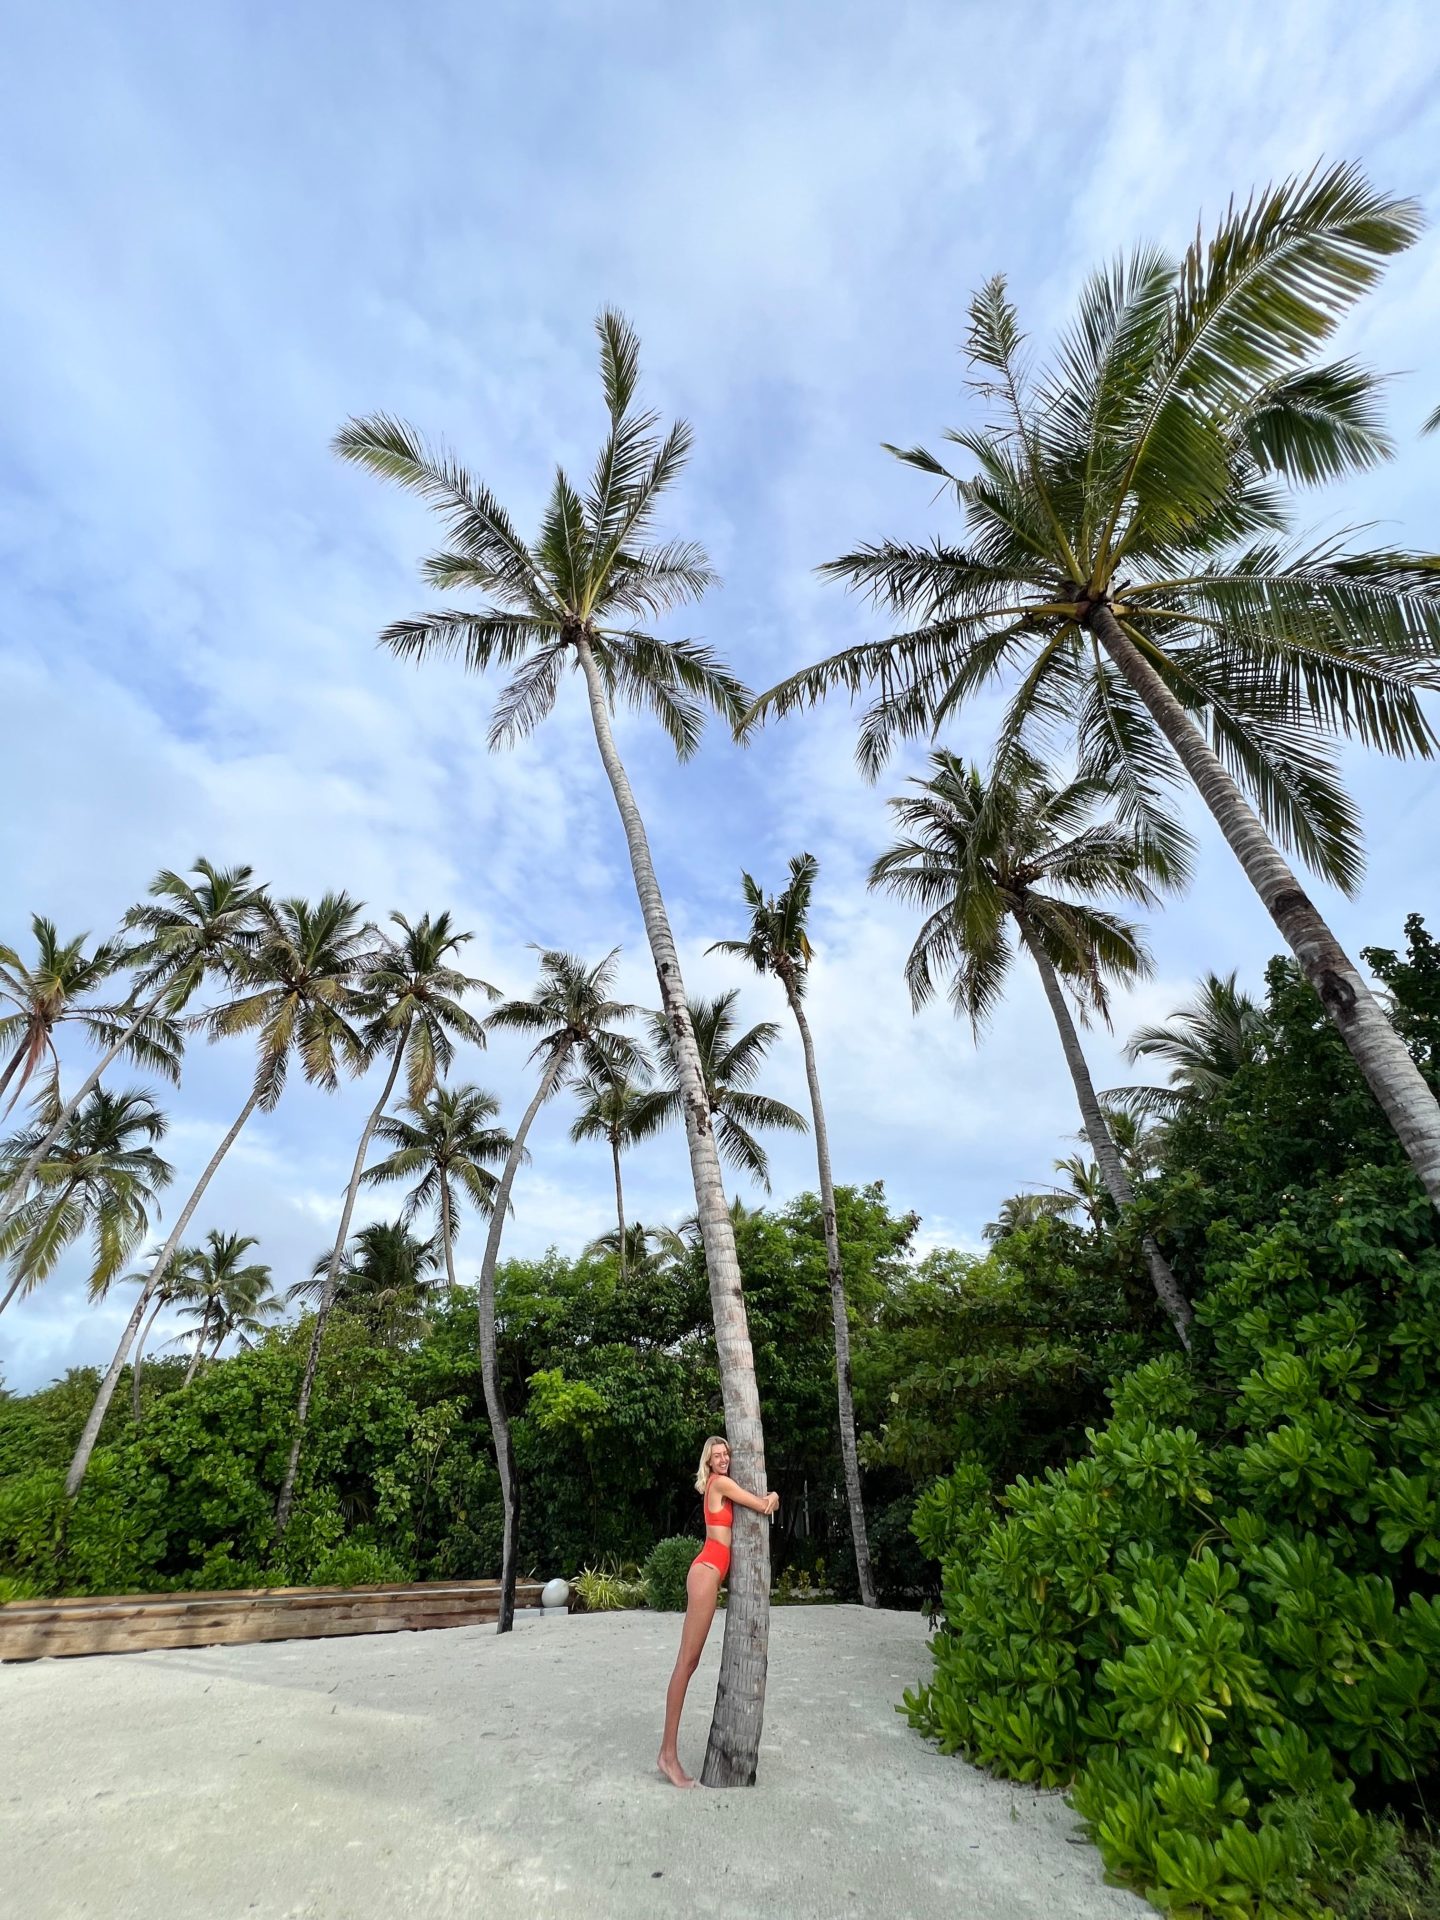 Zanna van Dijk in the Maldives, hugging a palm tree